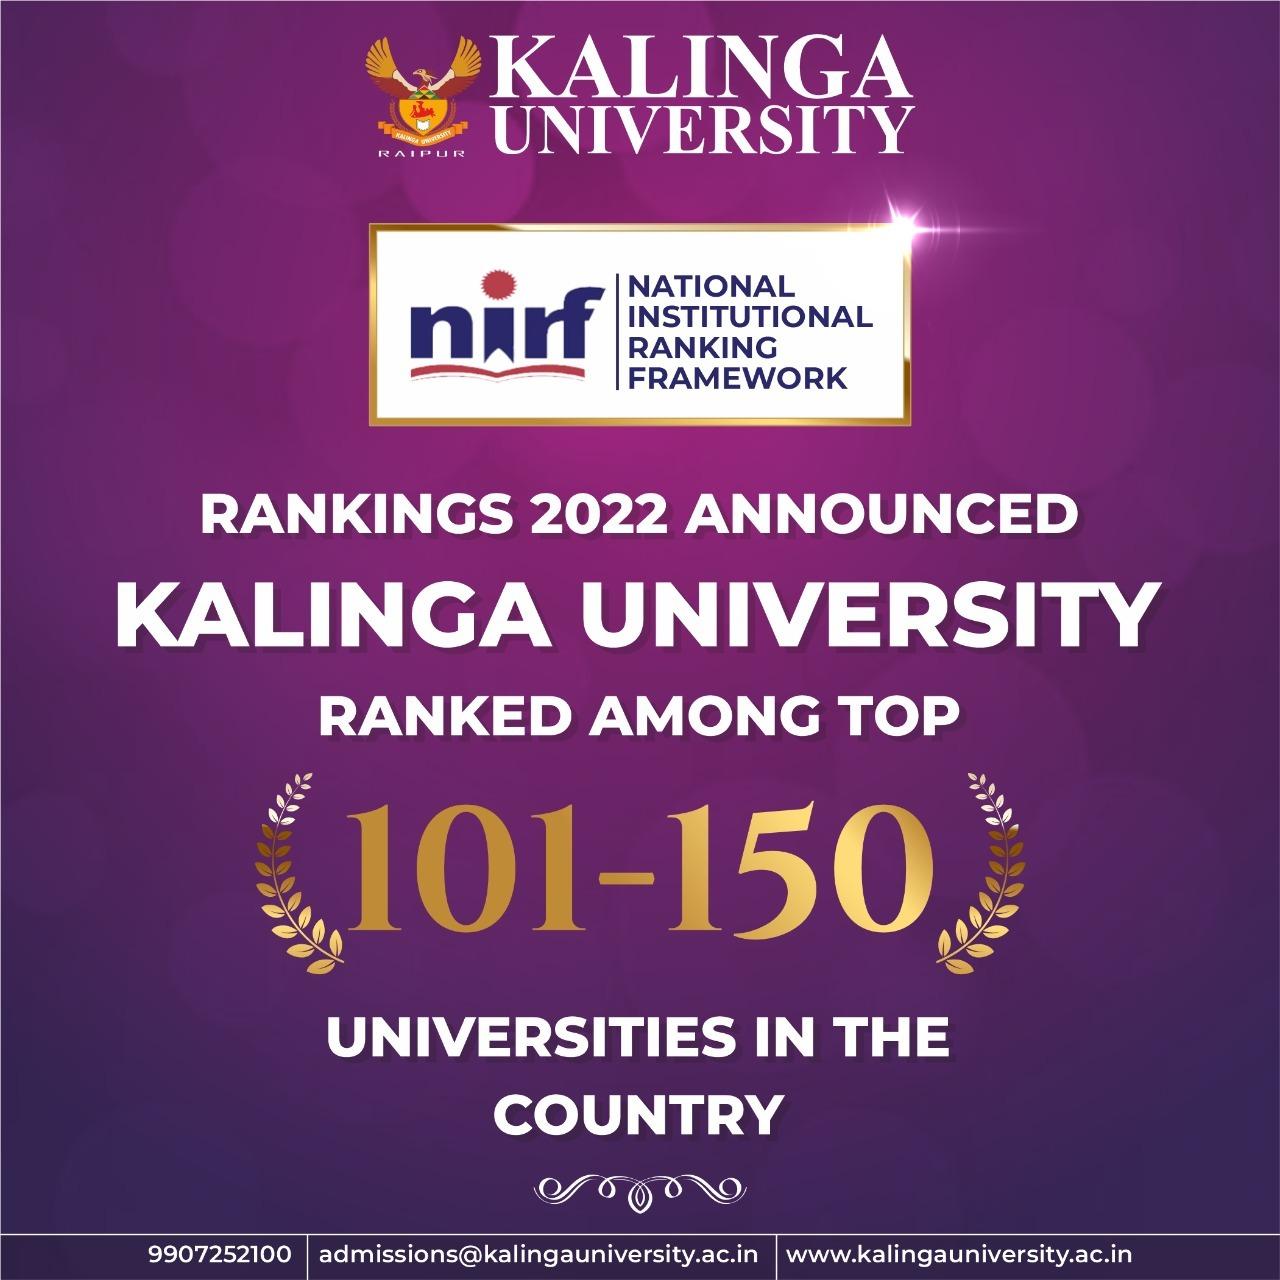 Kalinga University among top 150 universities in the country in NIRF 2022 ranking